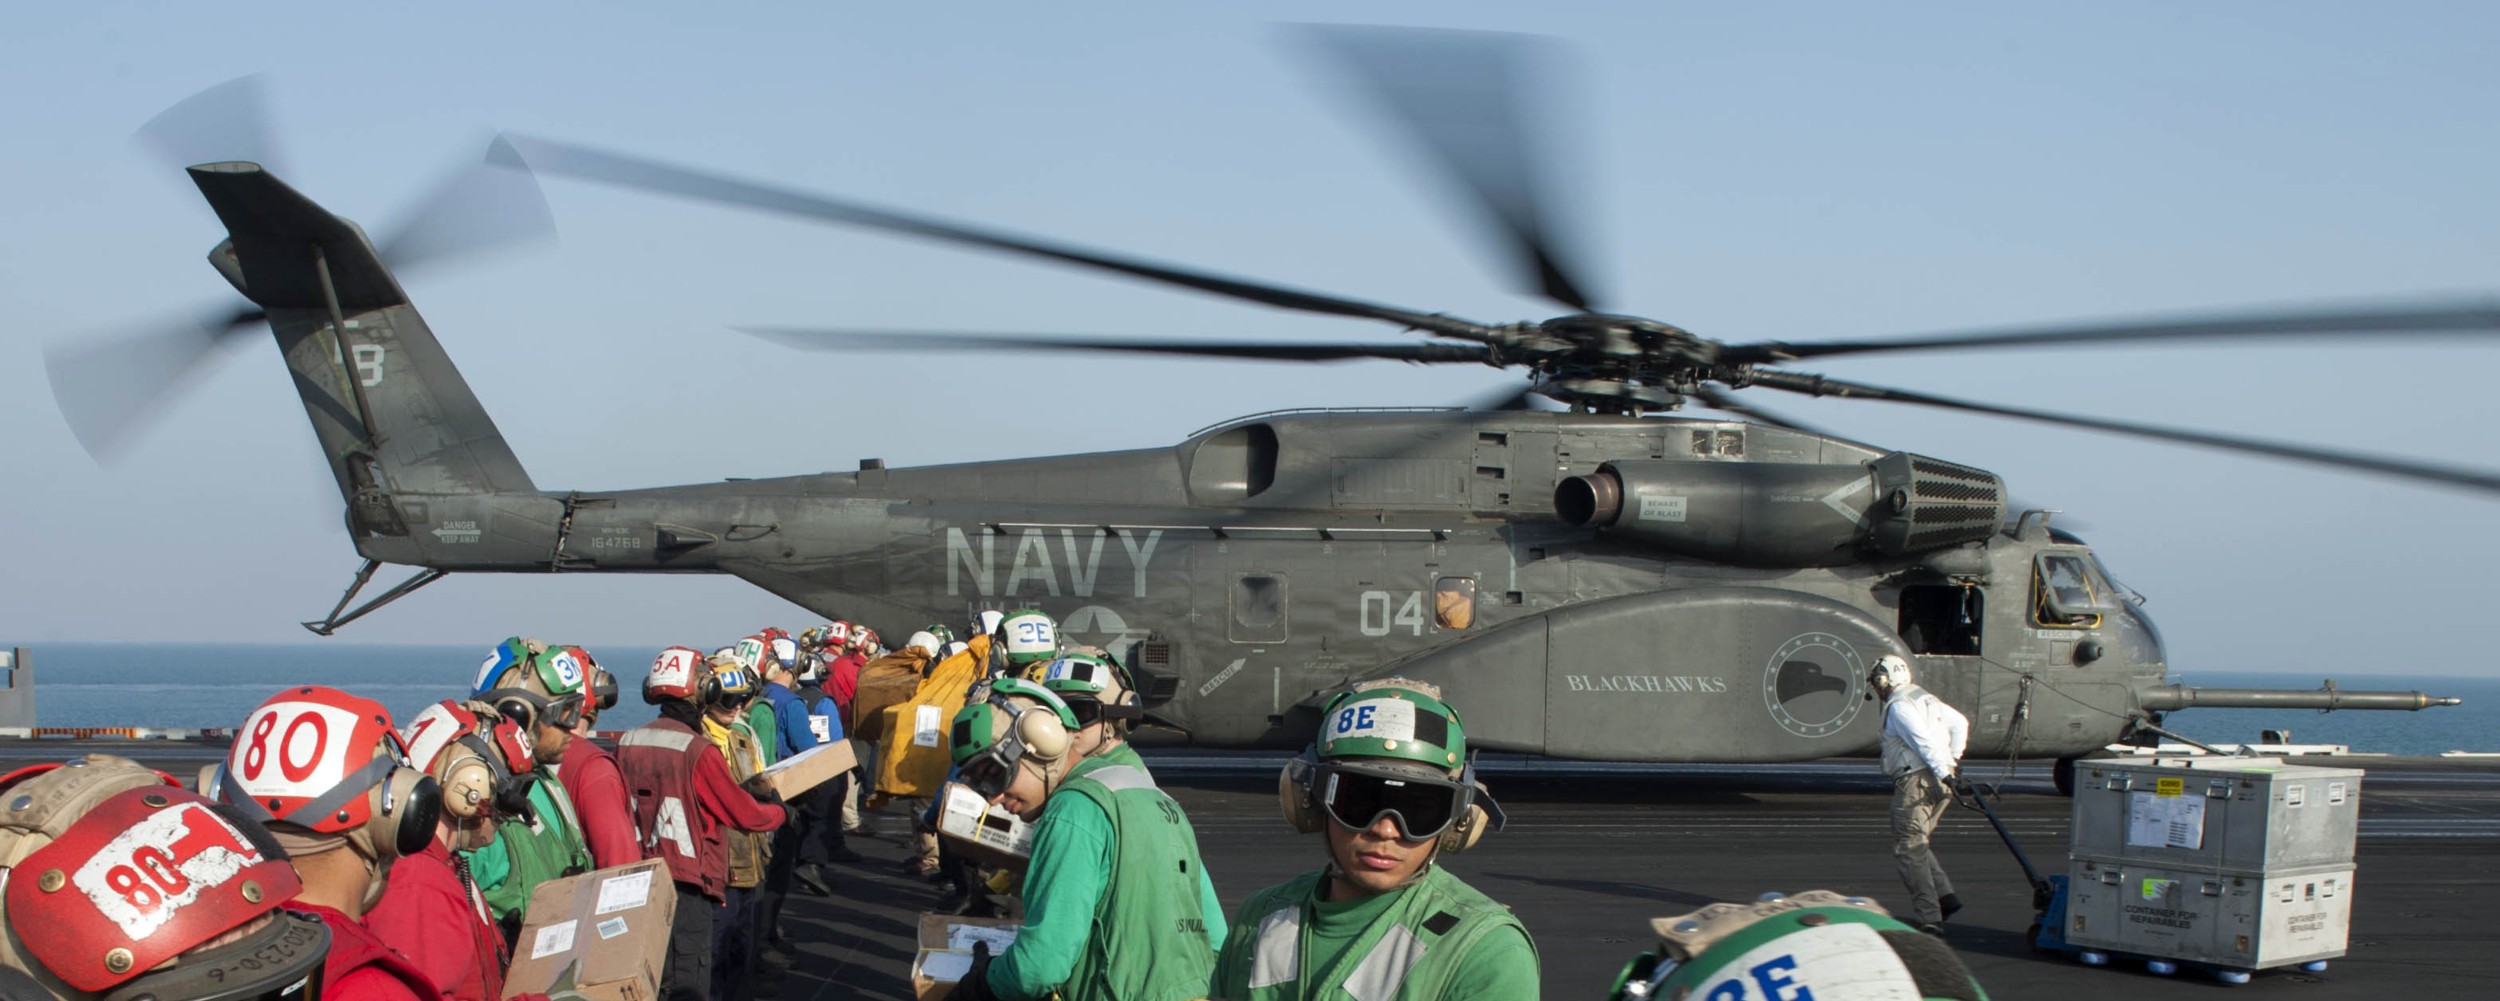 hm-15 blackhawks helicopter mine countermeasures squadron navy mh-53e sea dragon 42 uss harry s. truman cvn-75